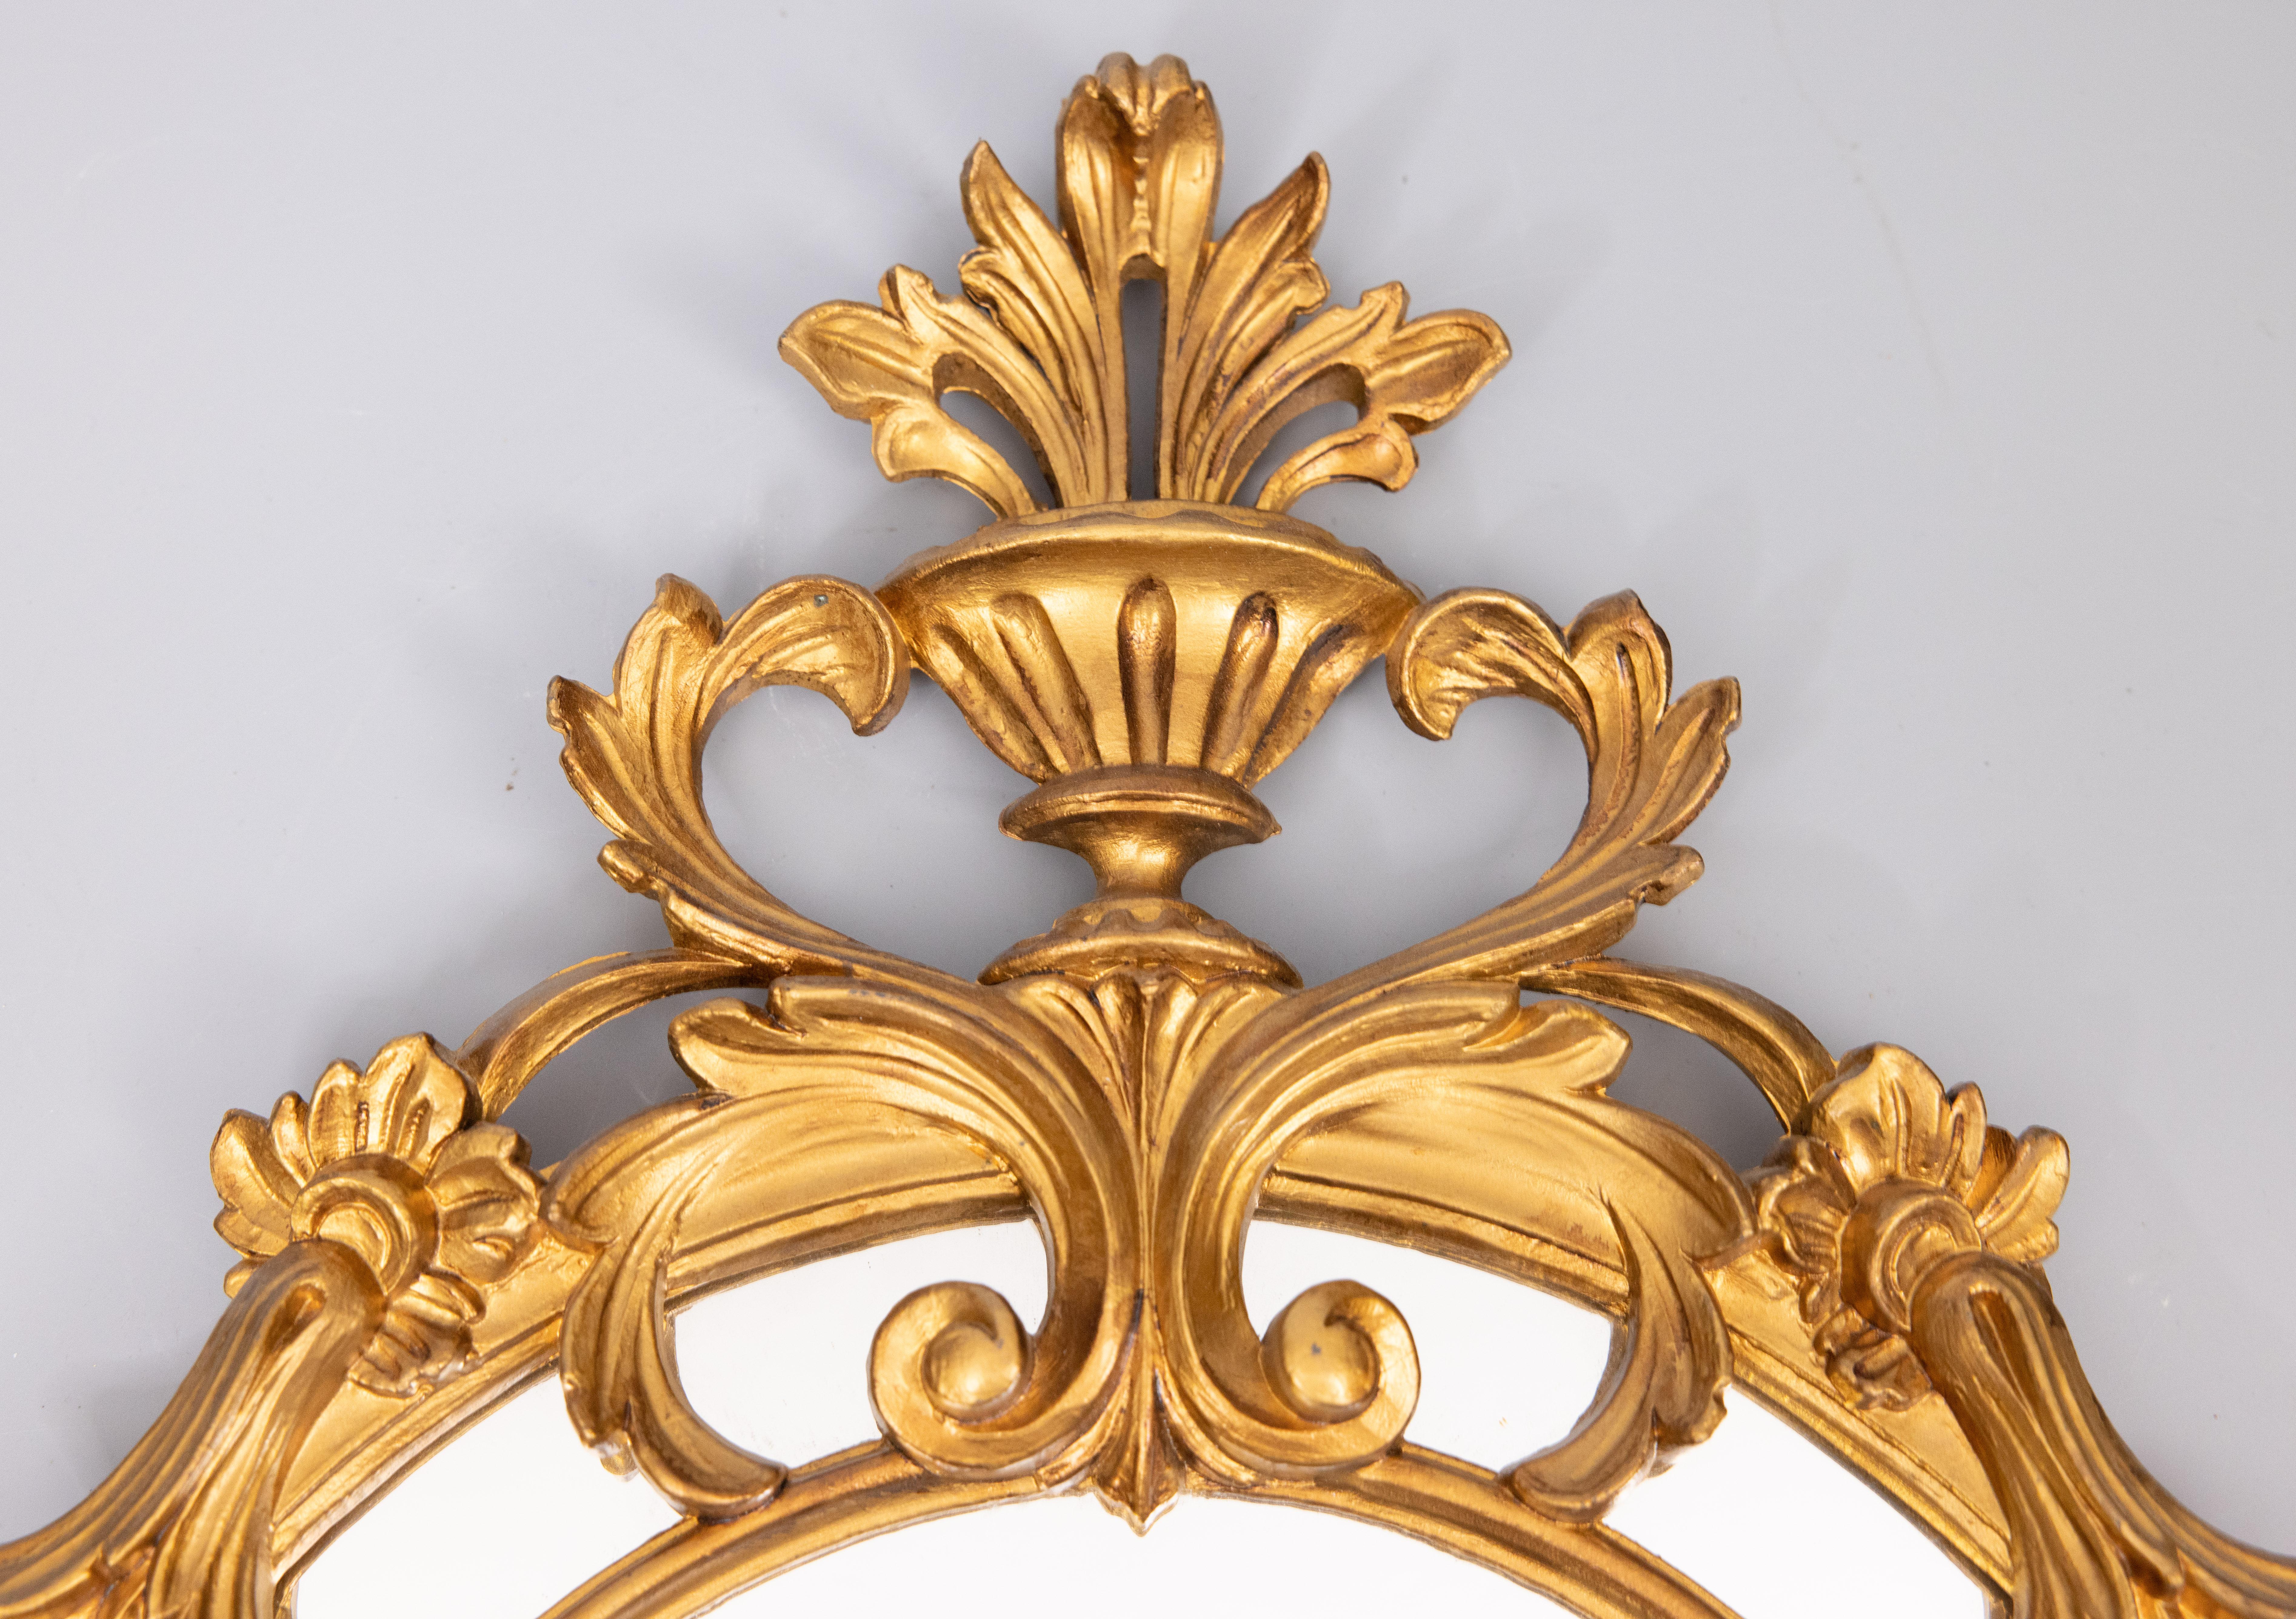 A stunning vintage Italian gilt resin round crested mirror. Marked 